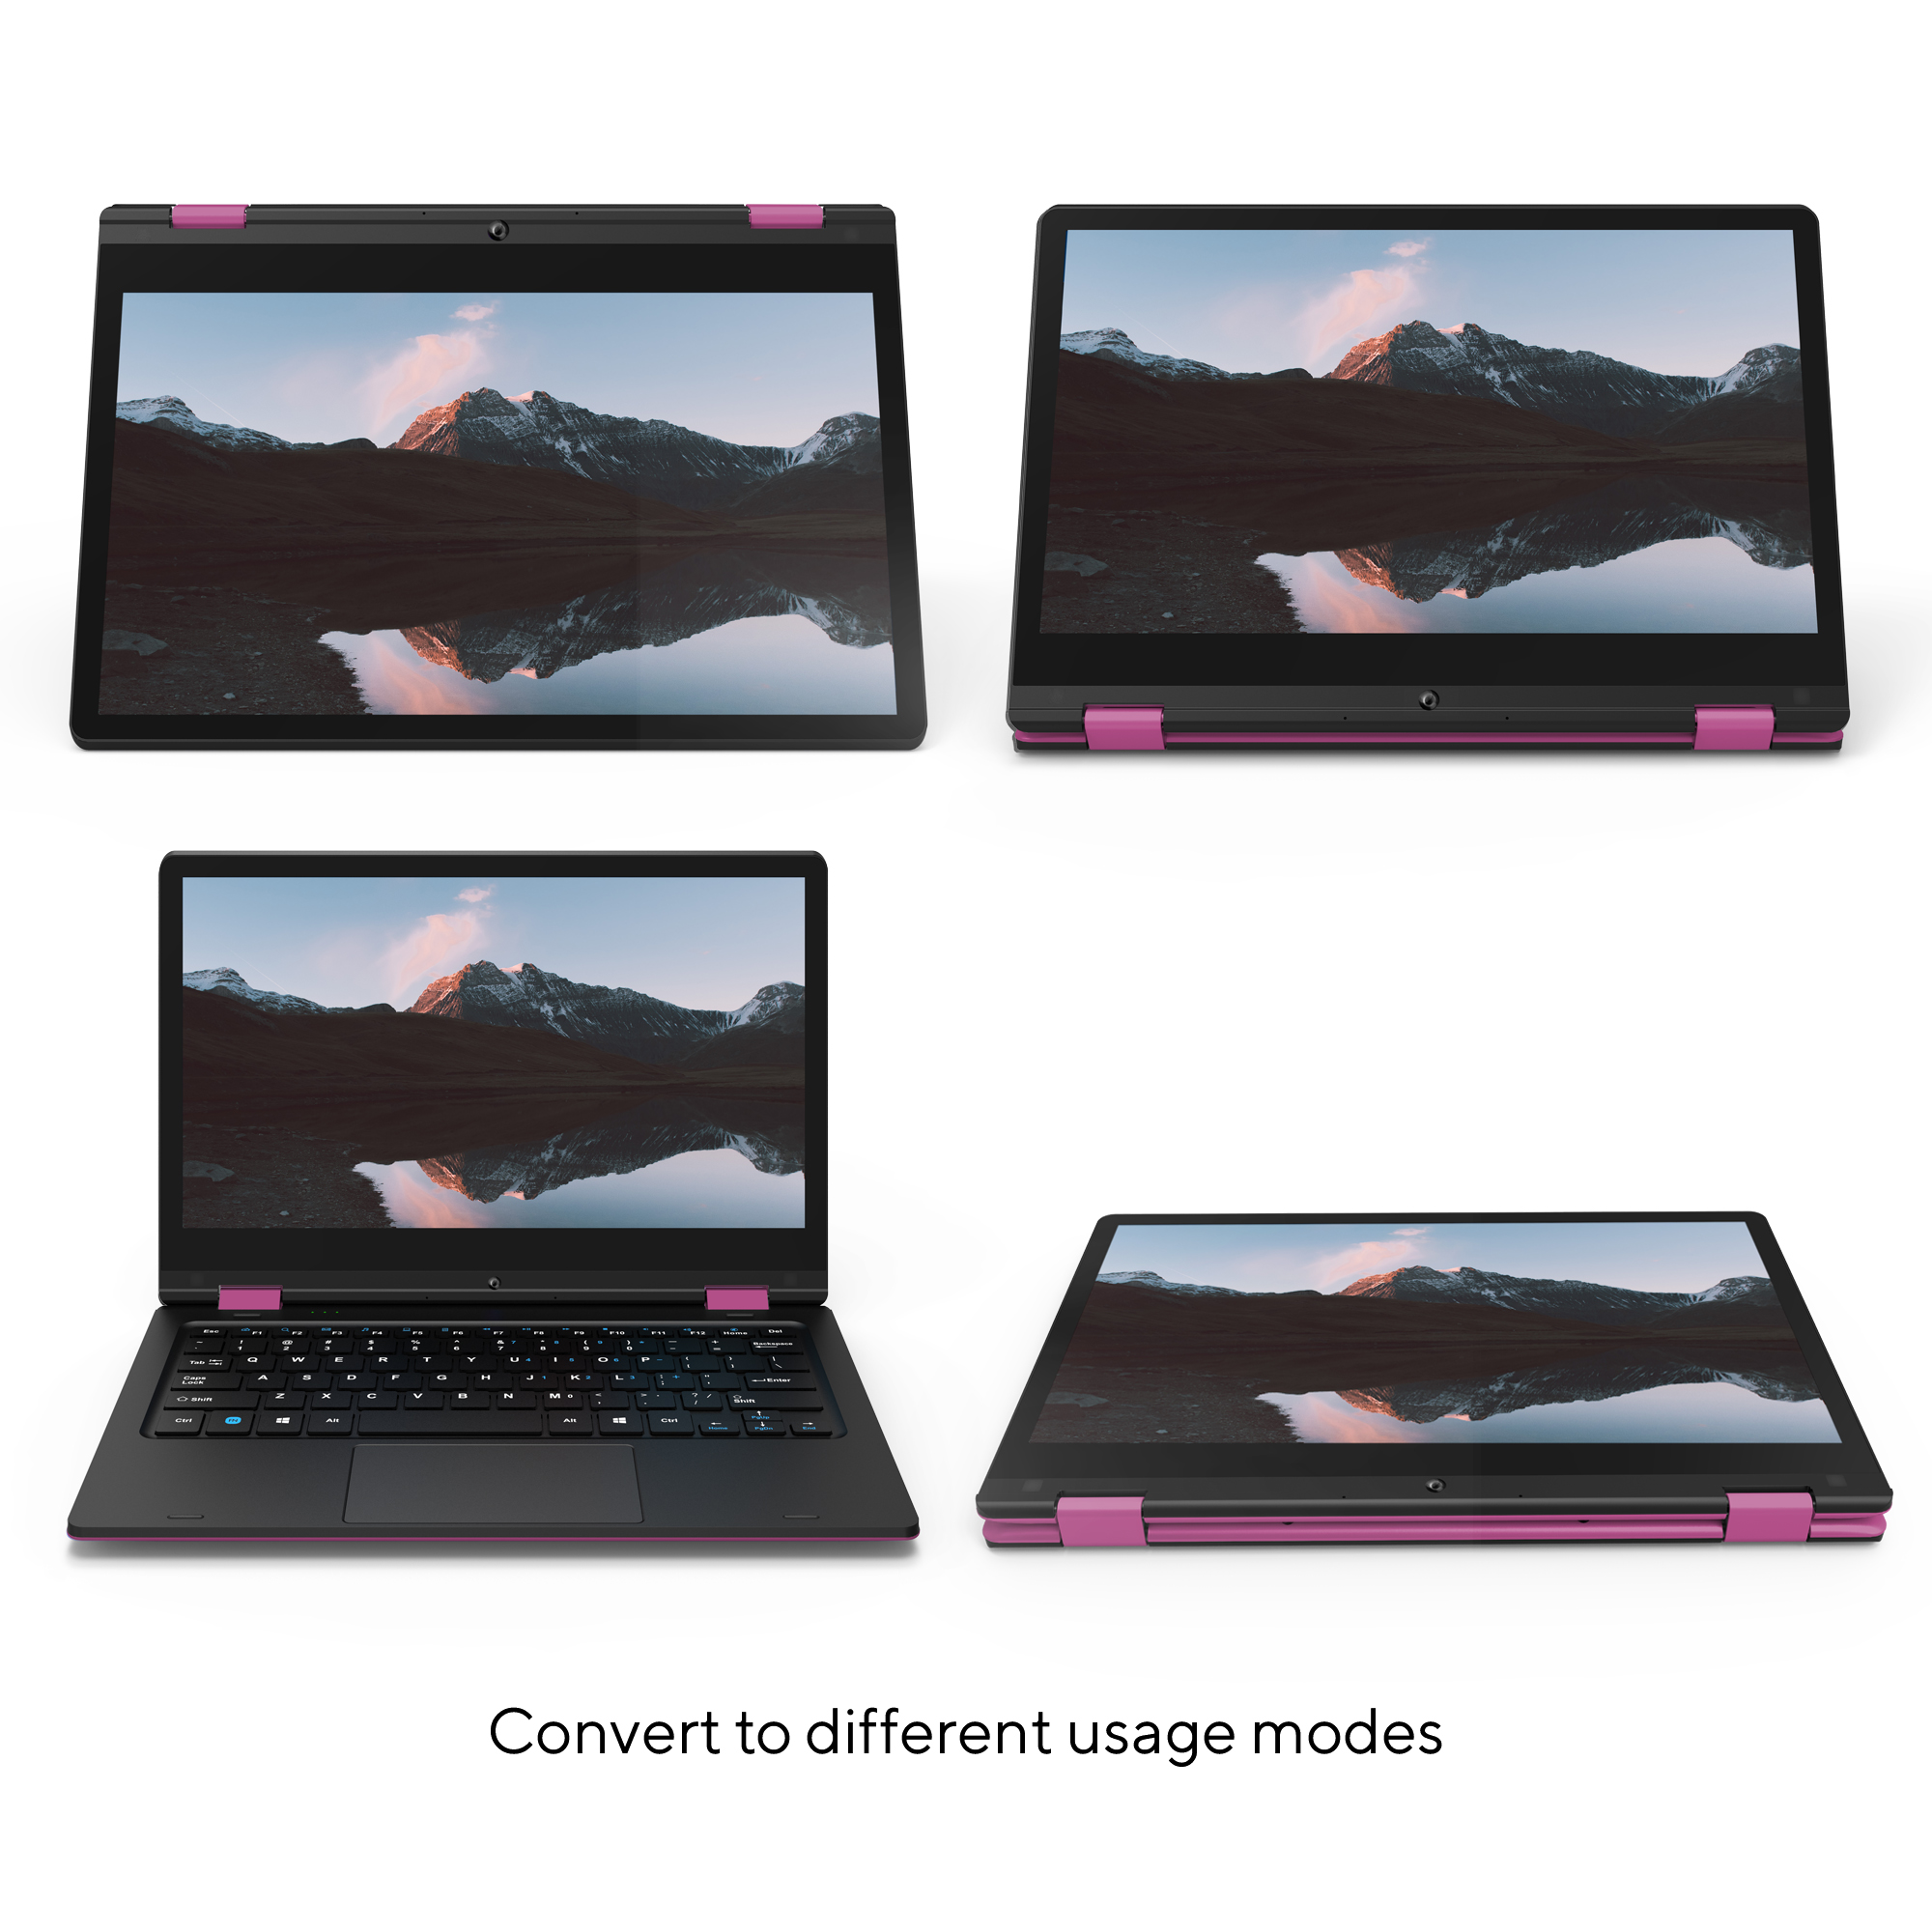 Core Innovations 11.6" 720p Touchscreen Laptop, Intel Celeron N3350, 4GB RAM, 64GB HD, Windows 10, Pink, CLT1164PN - image 5 of 11